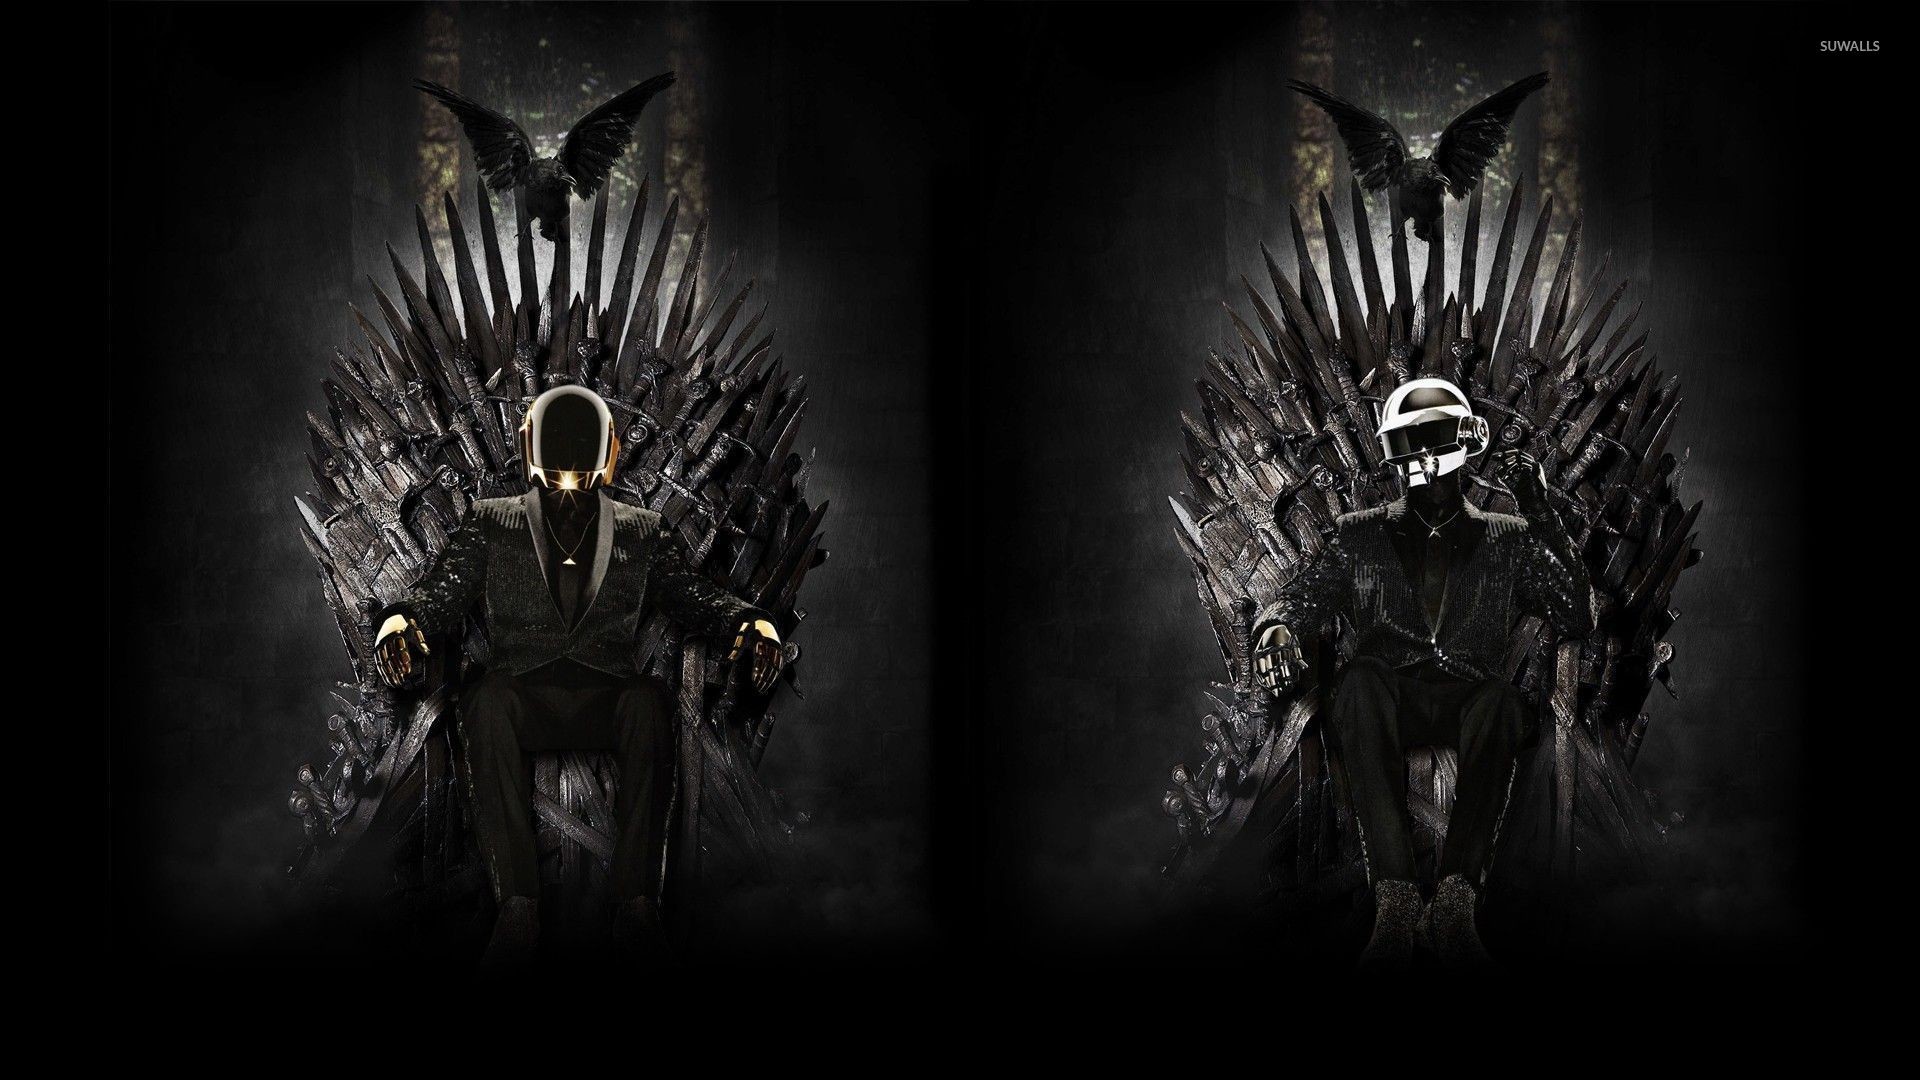 1920x1080 Daft Punk on the Iron Throne wallpaper  jpg